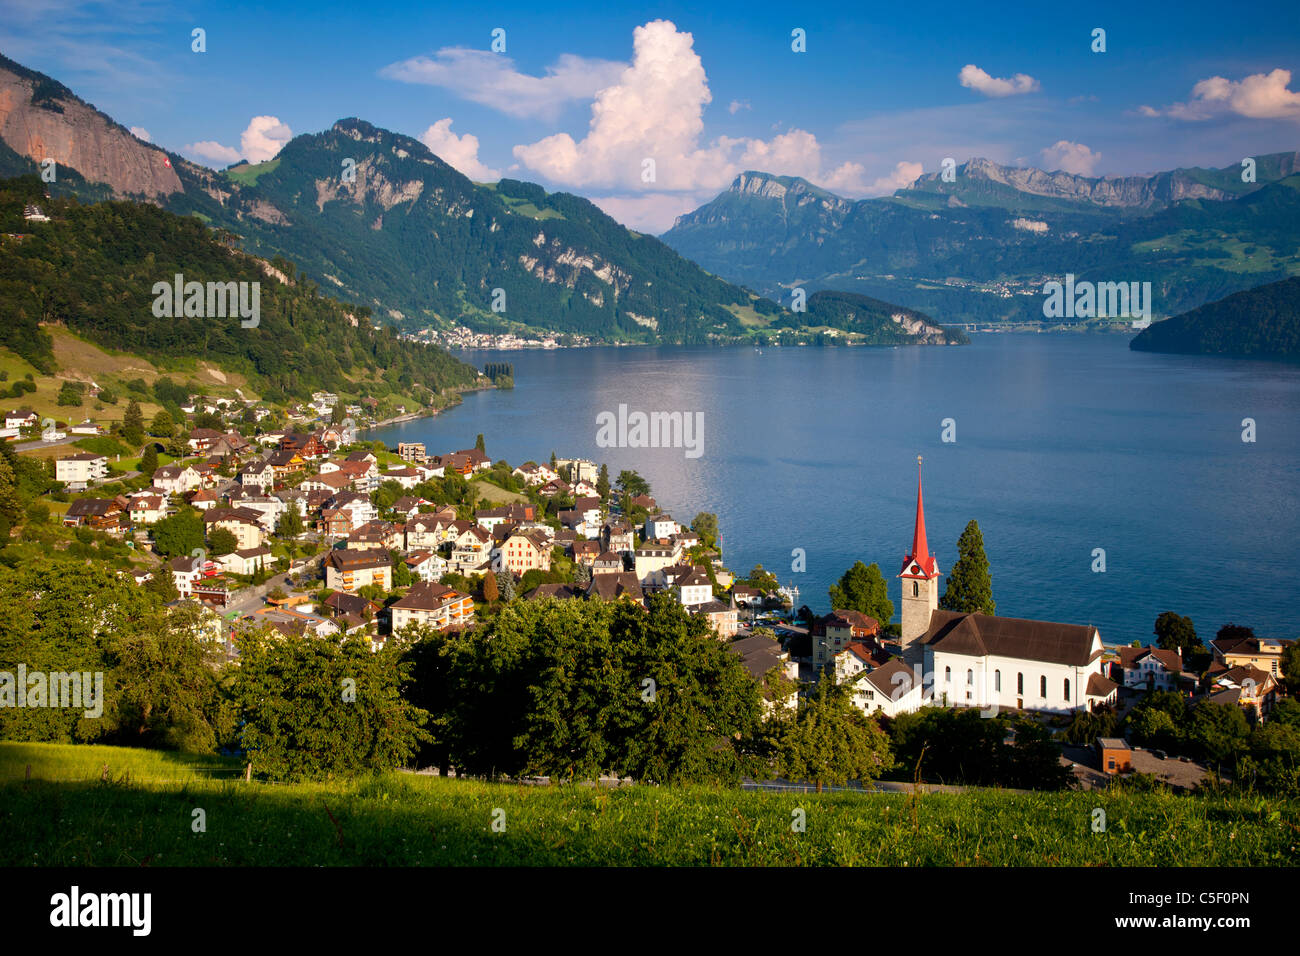 Resort town of Weggis overlooking Lake Lucerne in the Swiss Alps, Switzerland Stock Photo